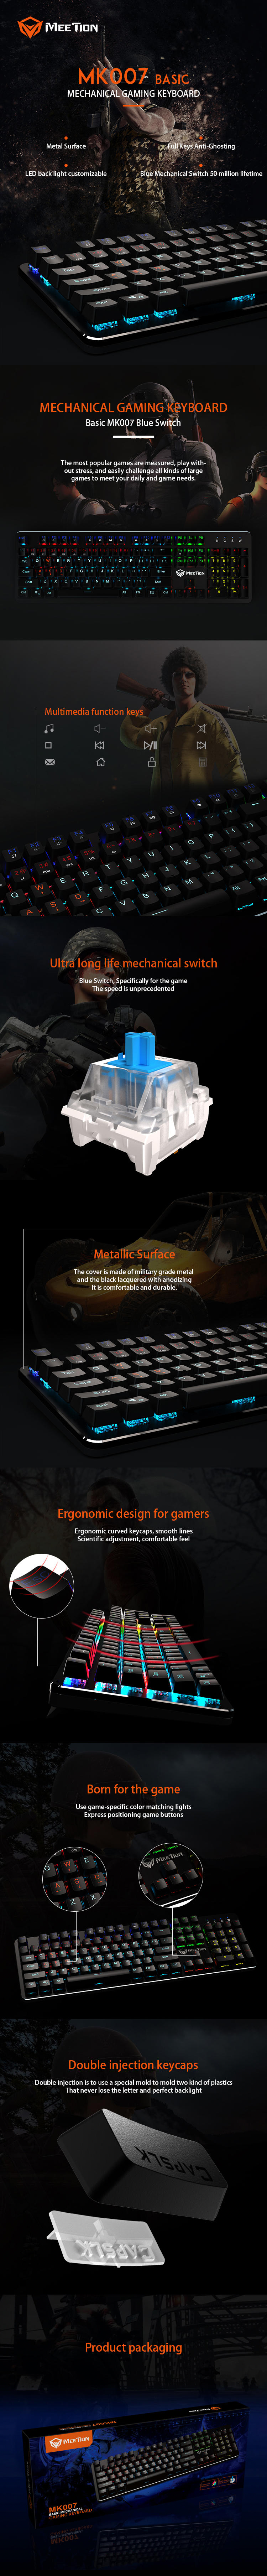 Meetion best mechanical keyboard company-1